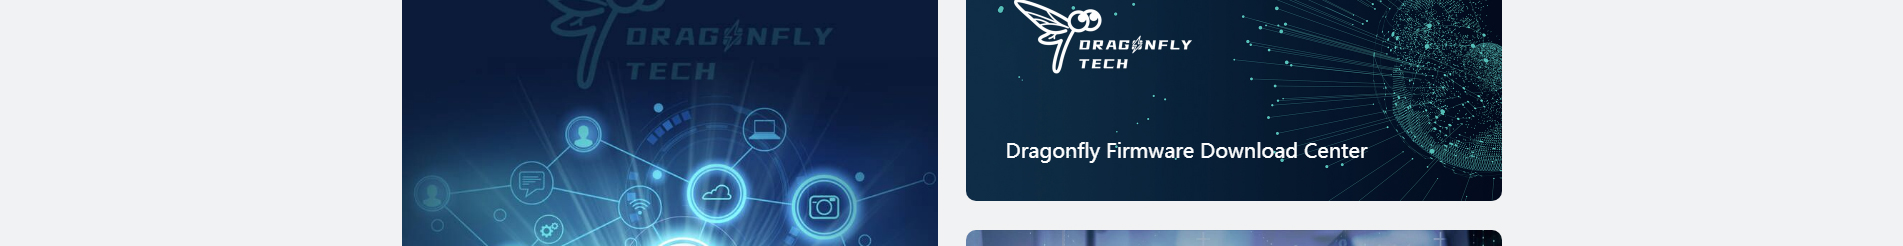 Dragonfly Technology_区块链_挖矿解决方案_外贸网站_深圳网站建设